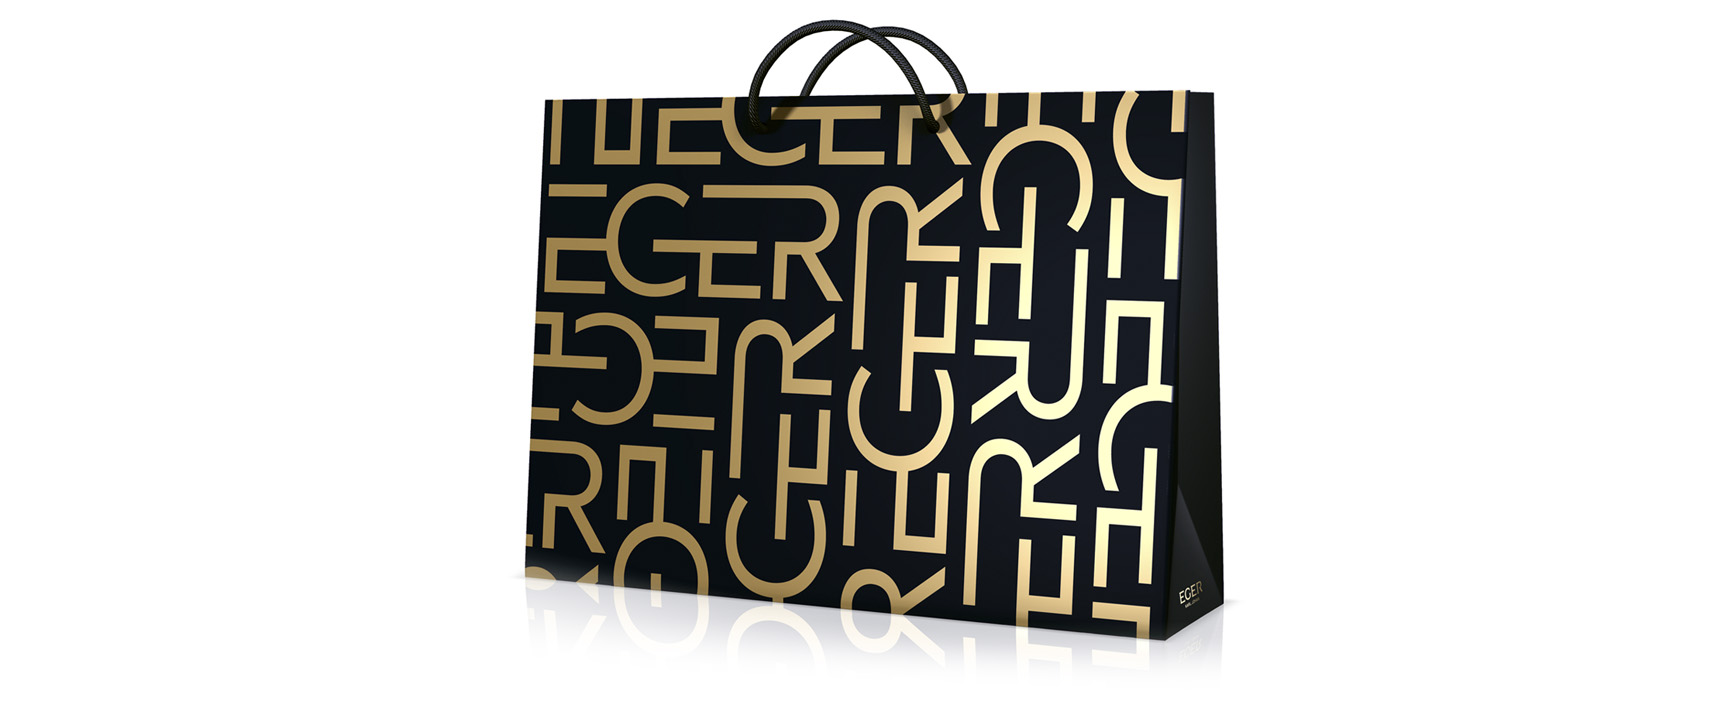 Eger Karl Johan shopping bag. Visuell identitet visual identity.